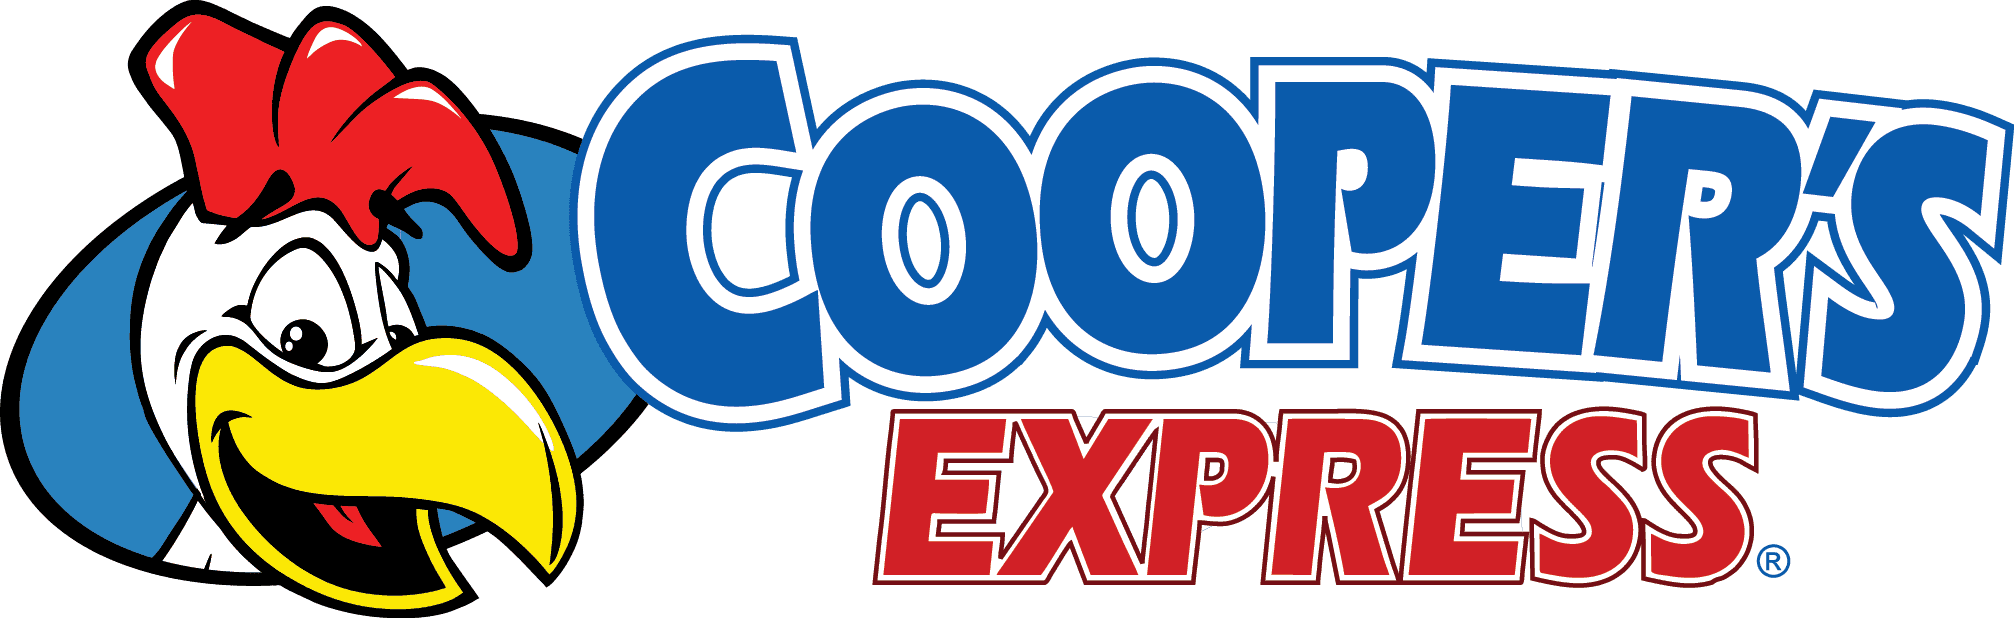 Cooper's Express